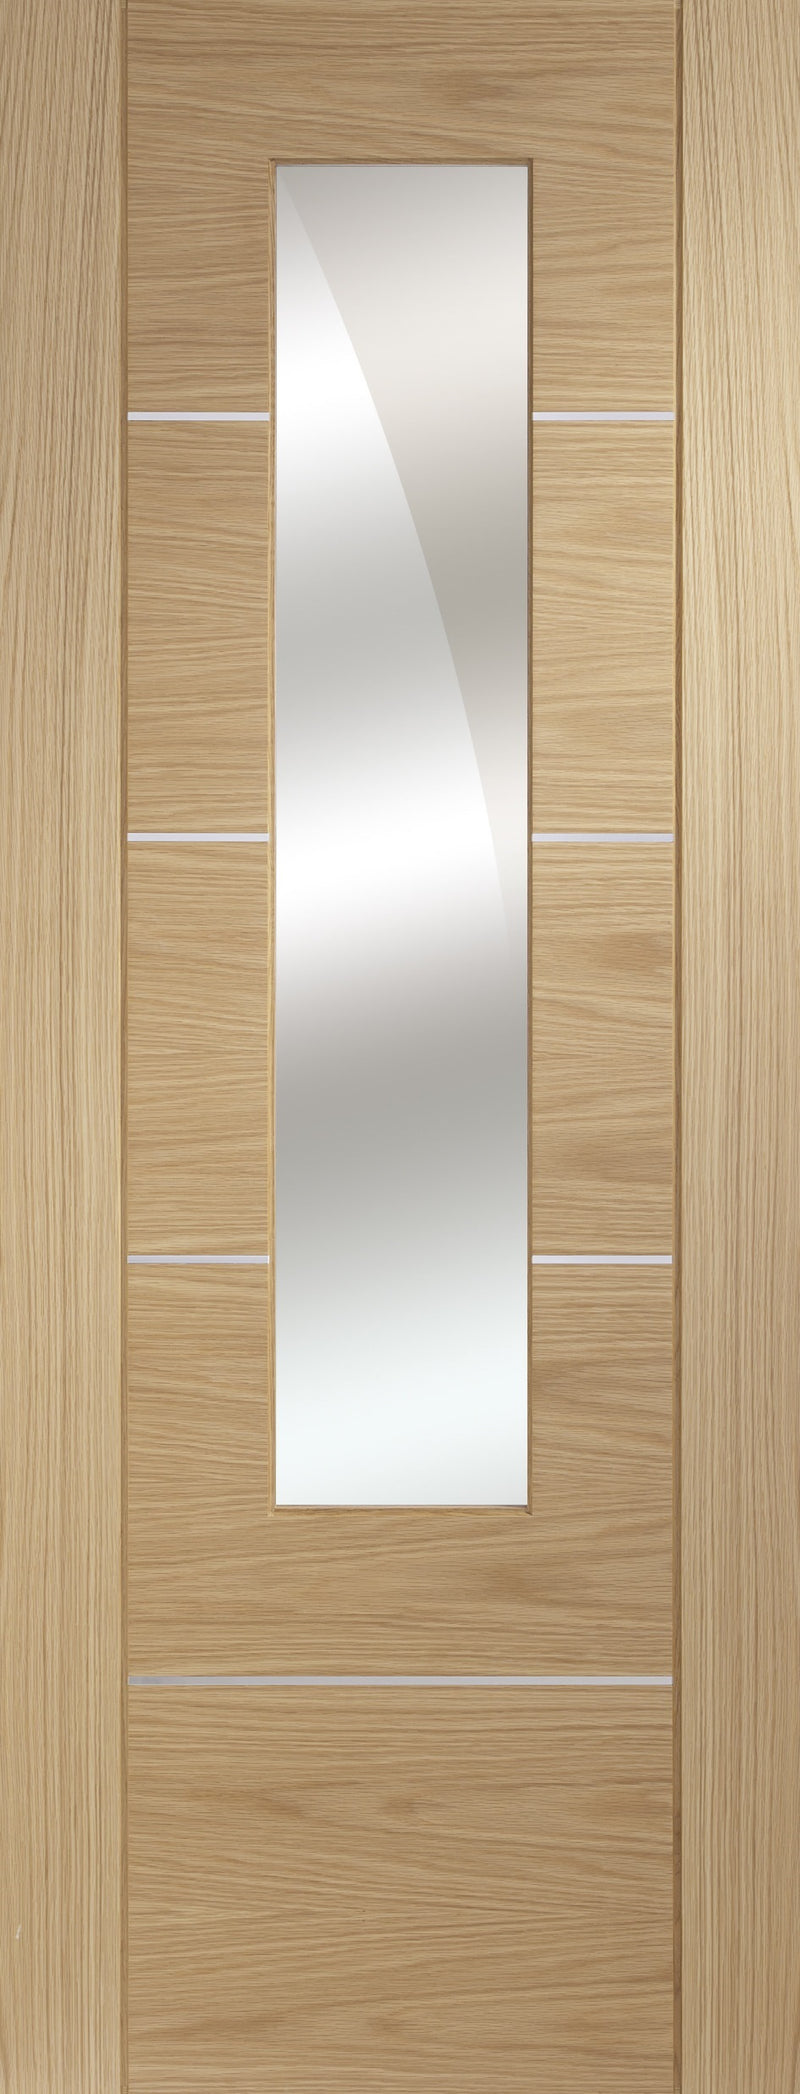 Portici prefinished oak internal door, with aluminium inlays and mirror.